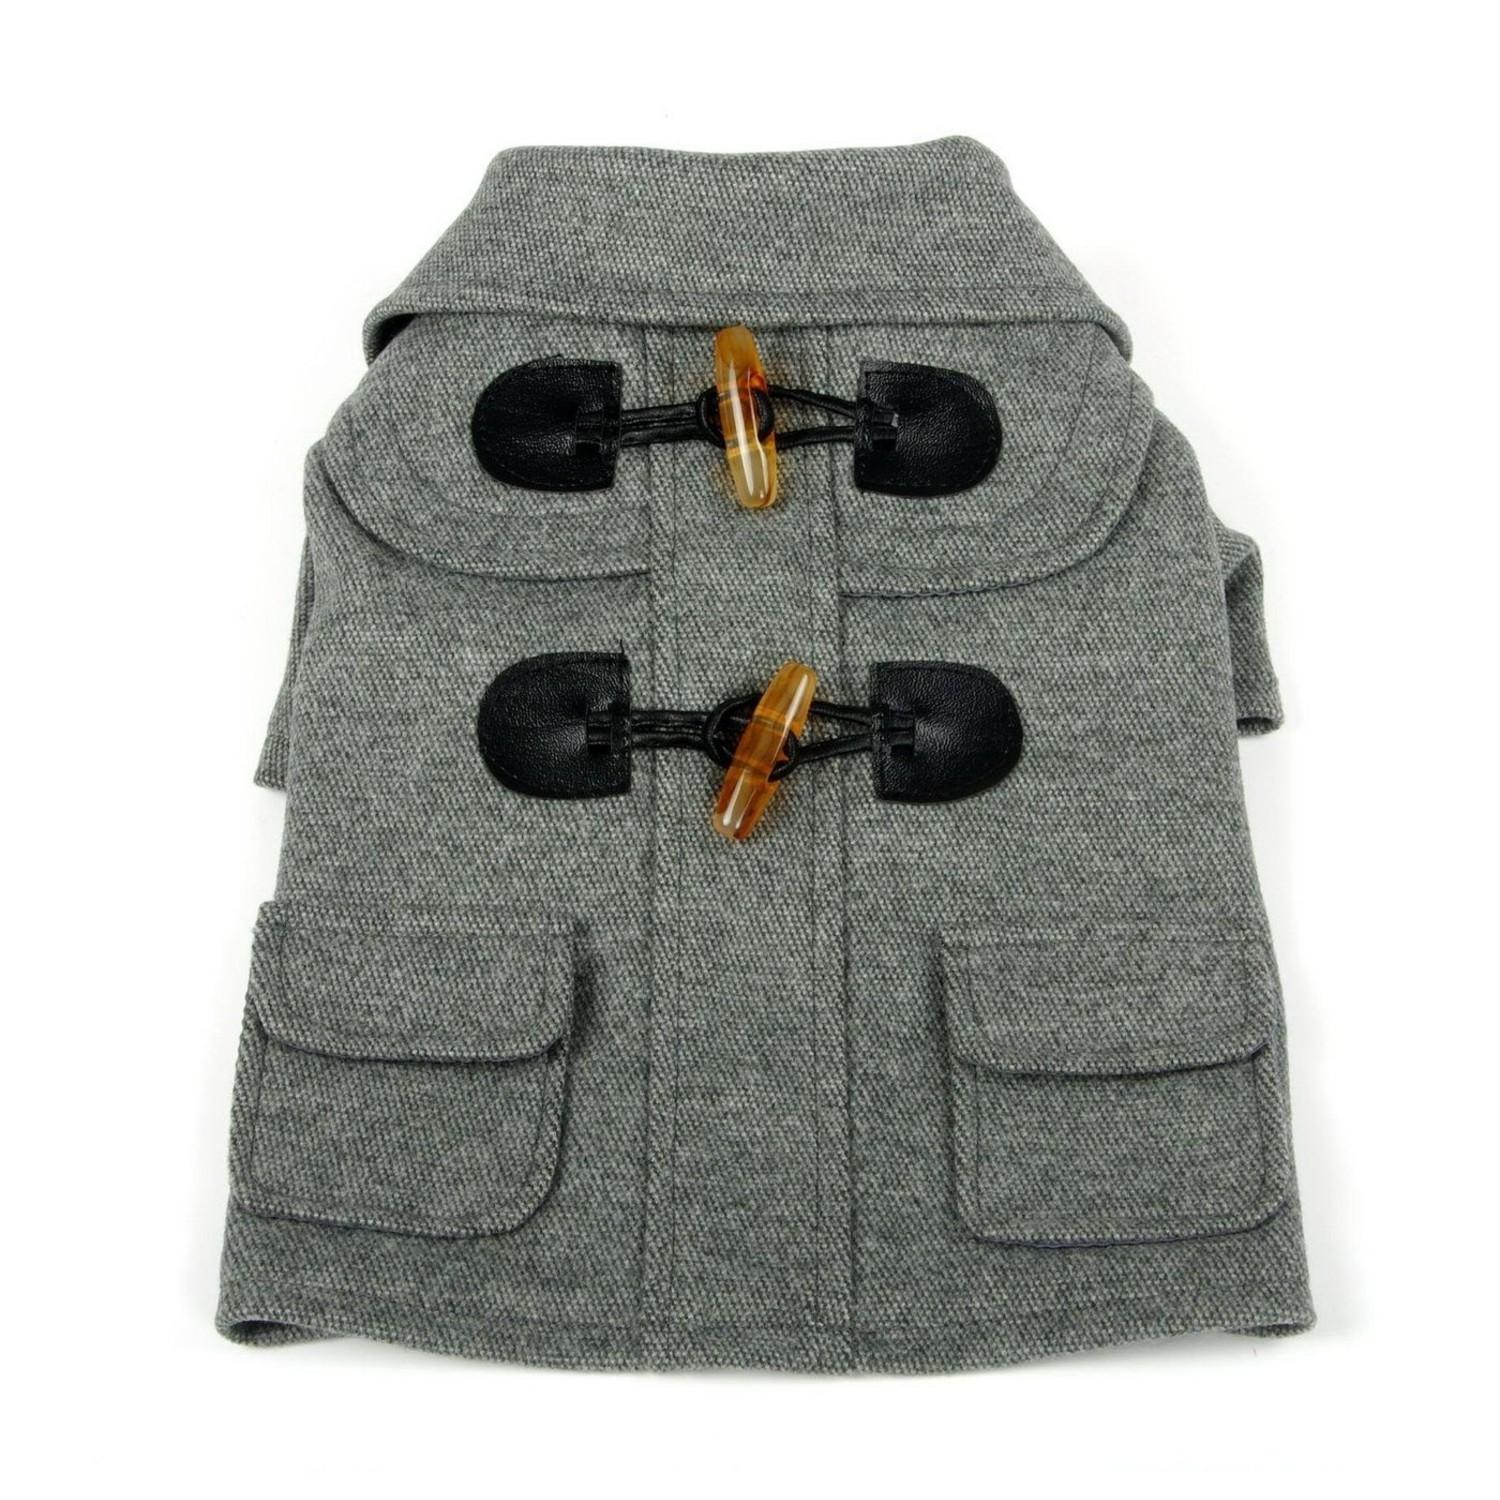 Pet Life Military Static Wool Dog Jacket - Gray